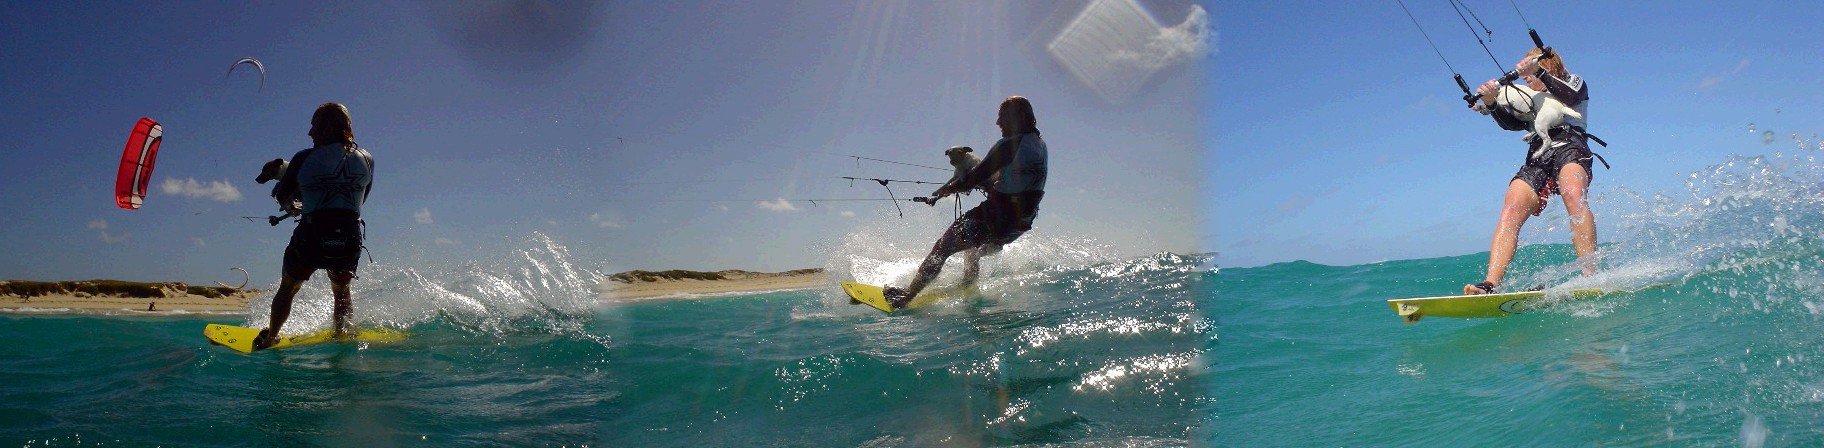 Kitesurfing in the Caribbean